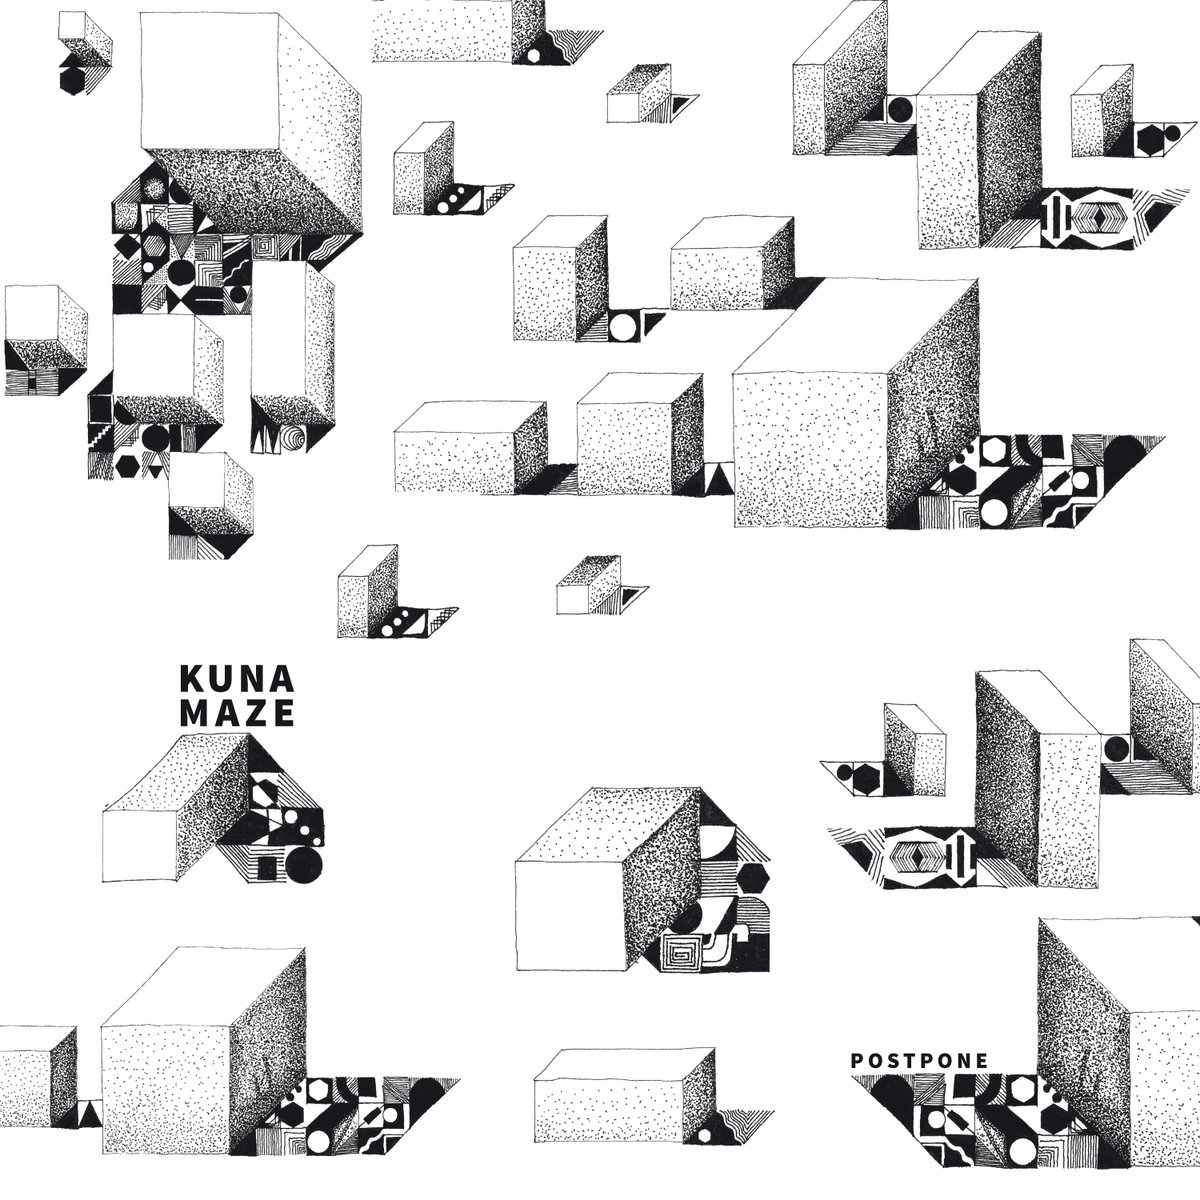 Kuna Maze - "Postpone" (Release)